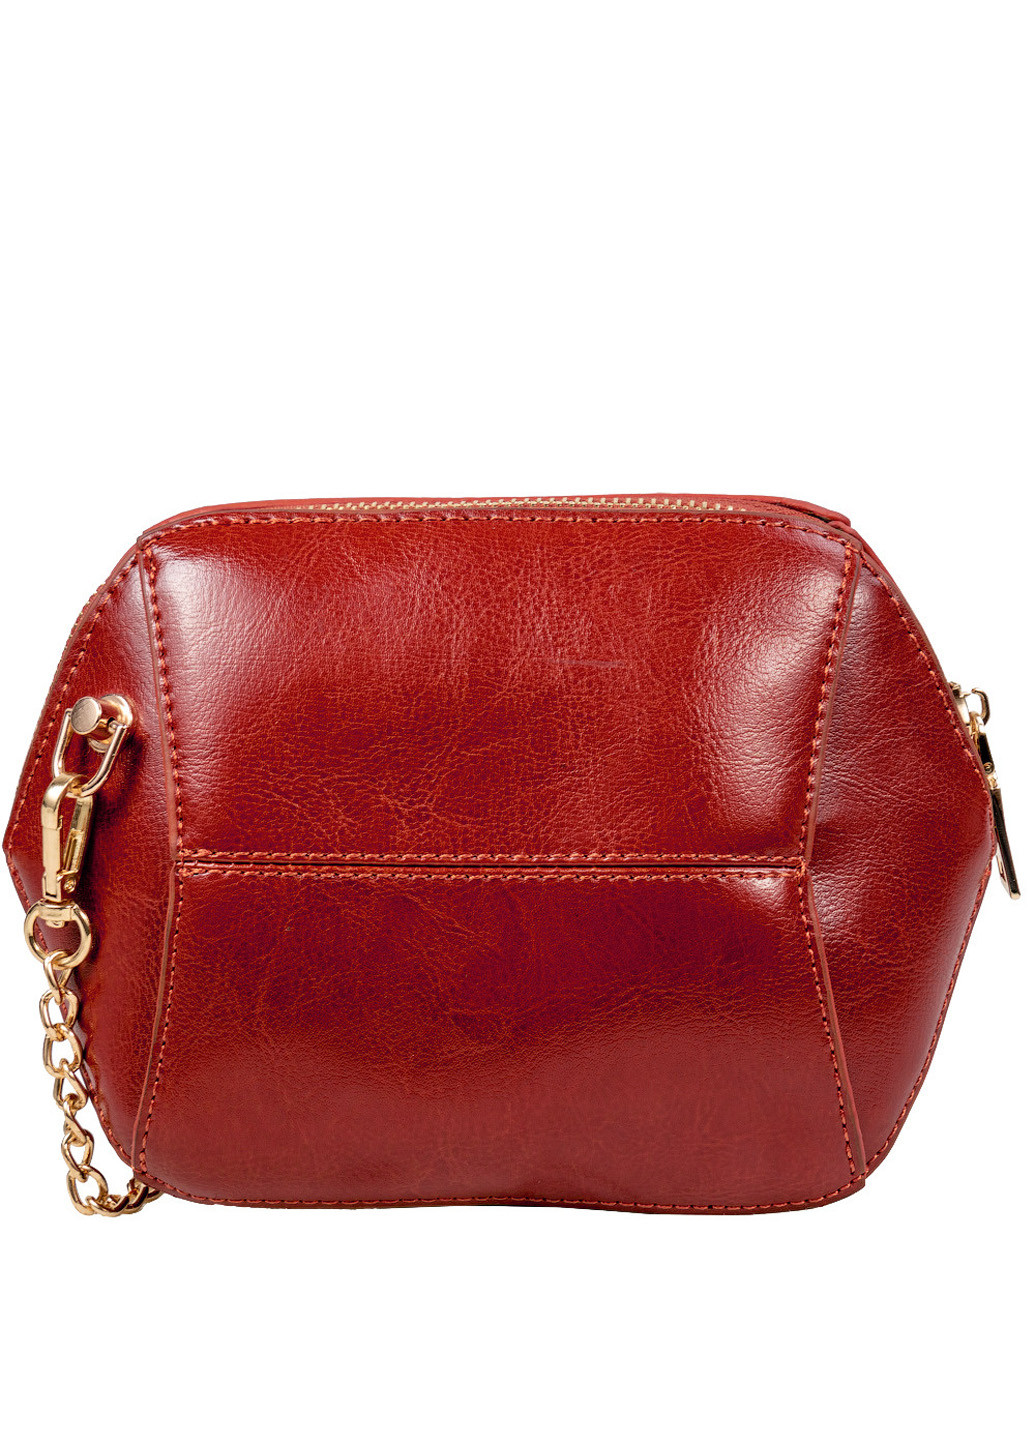 Женская кожаная сумка-клатч 16х14,5х7 см Eterno (195547743)